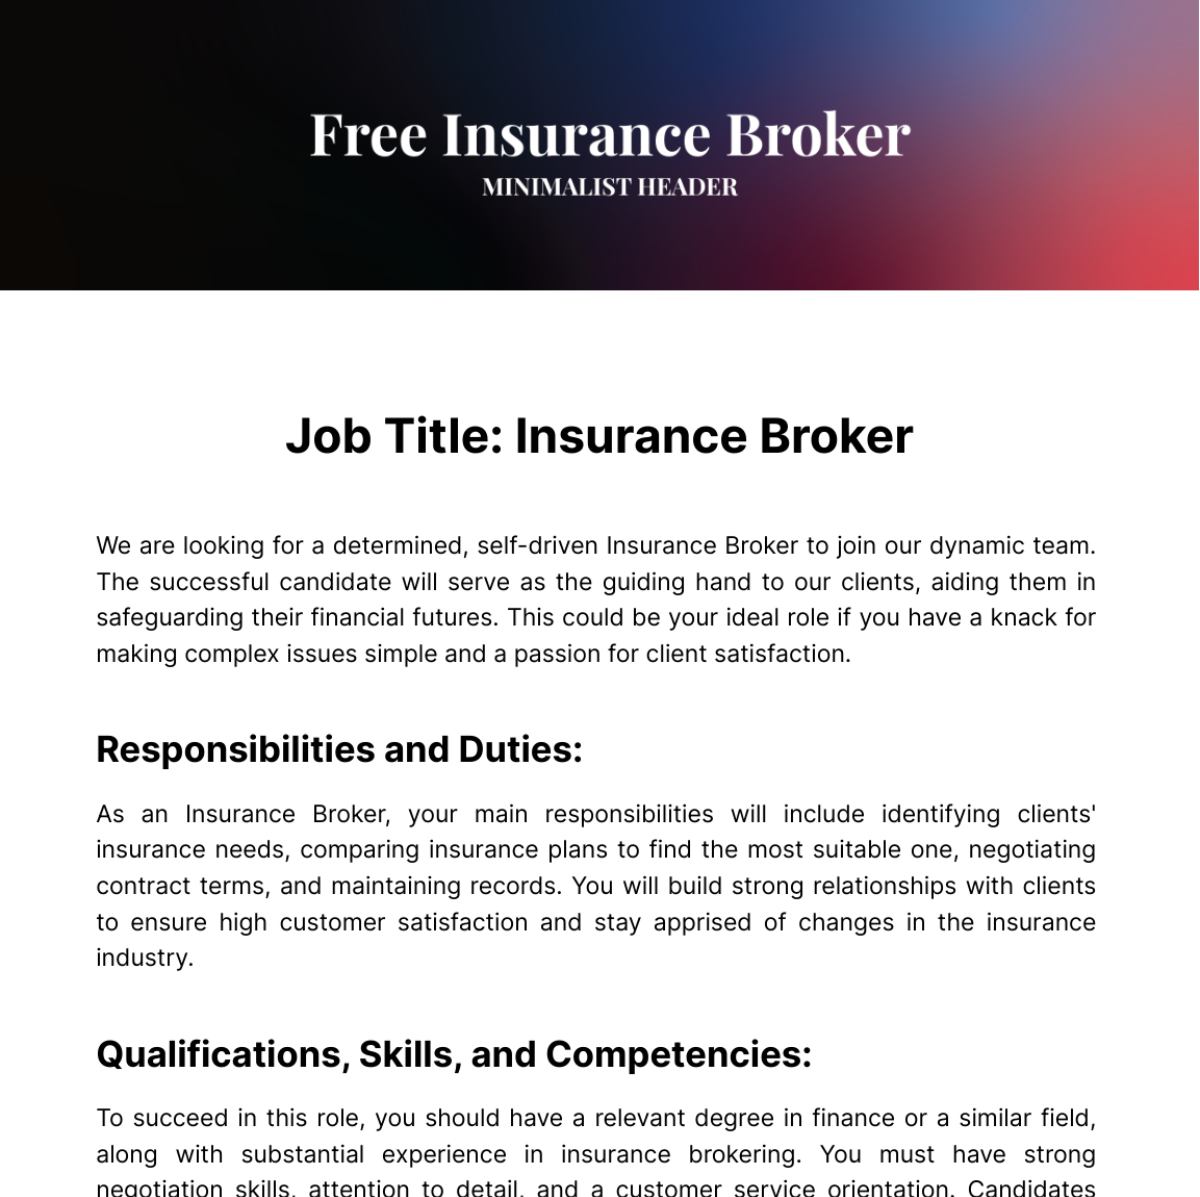 Free Insurance Broker Job Description Template